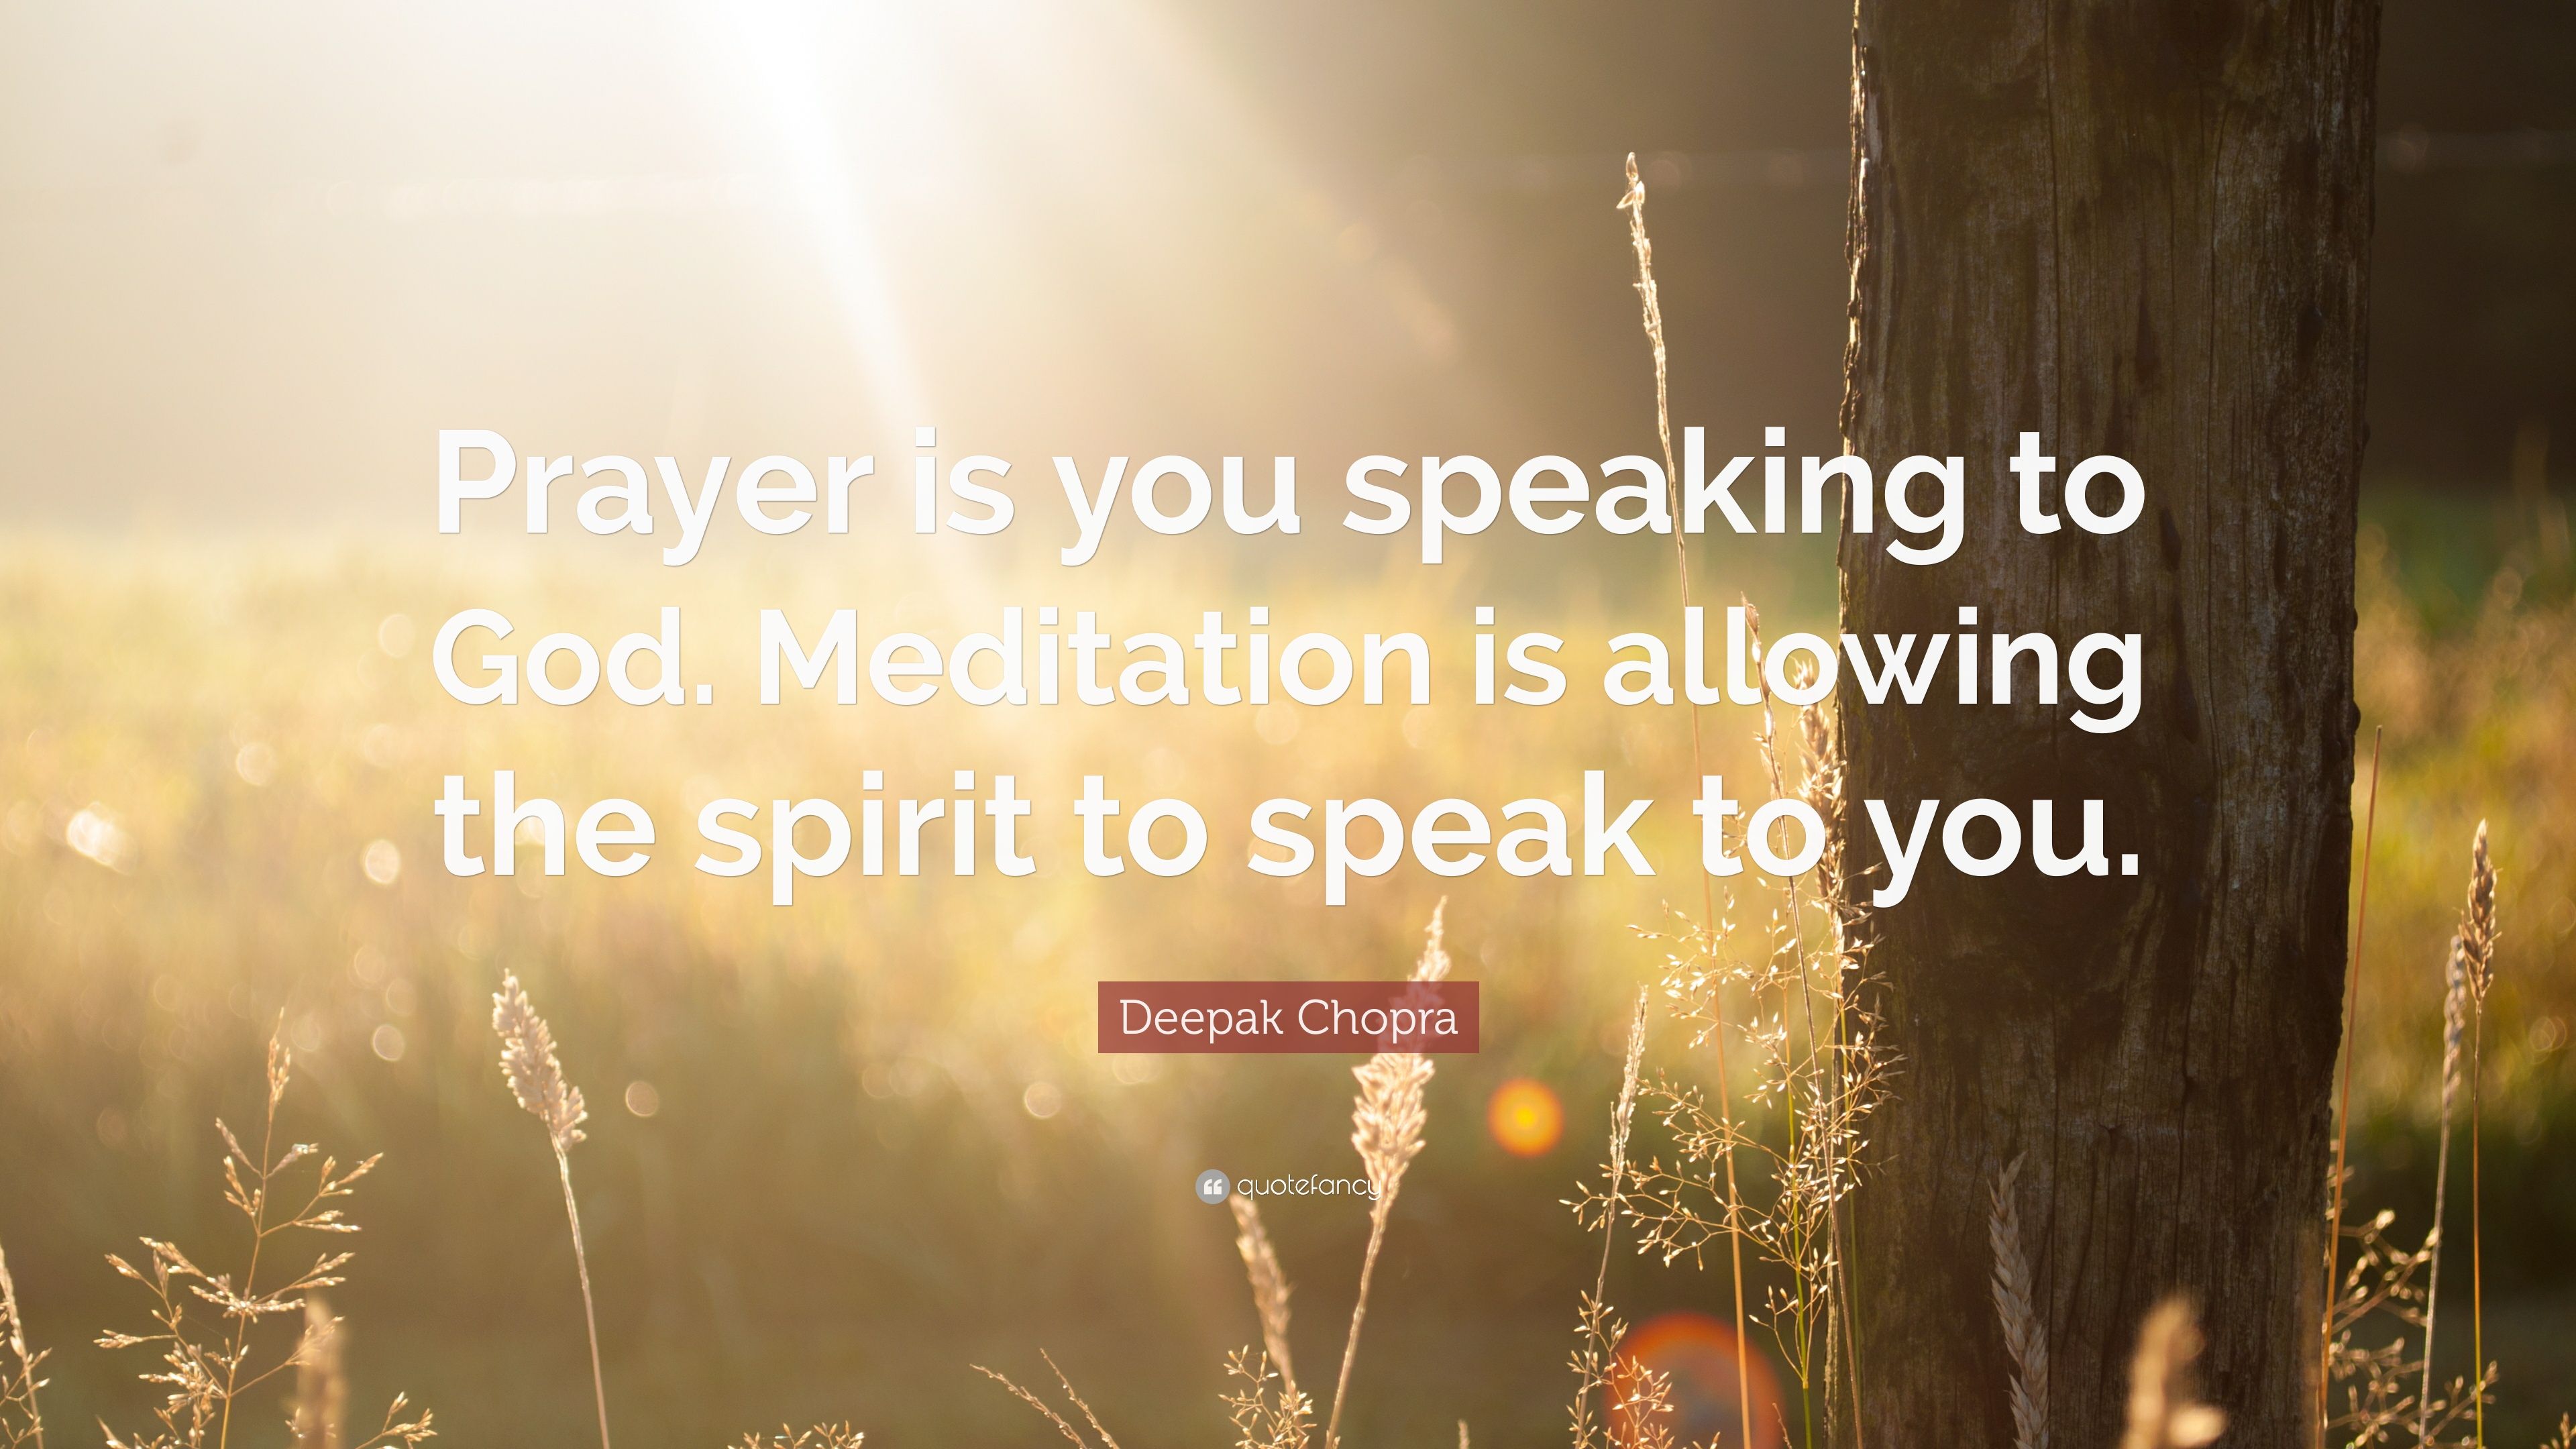 Deepak Chopra Quote: “Prayer is you speaking to God. Meditation is